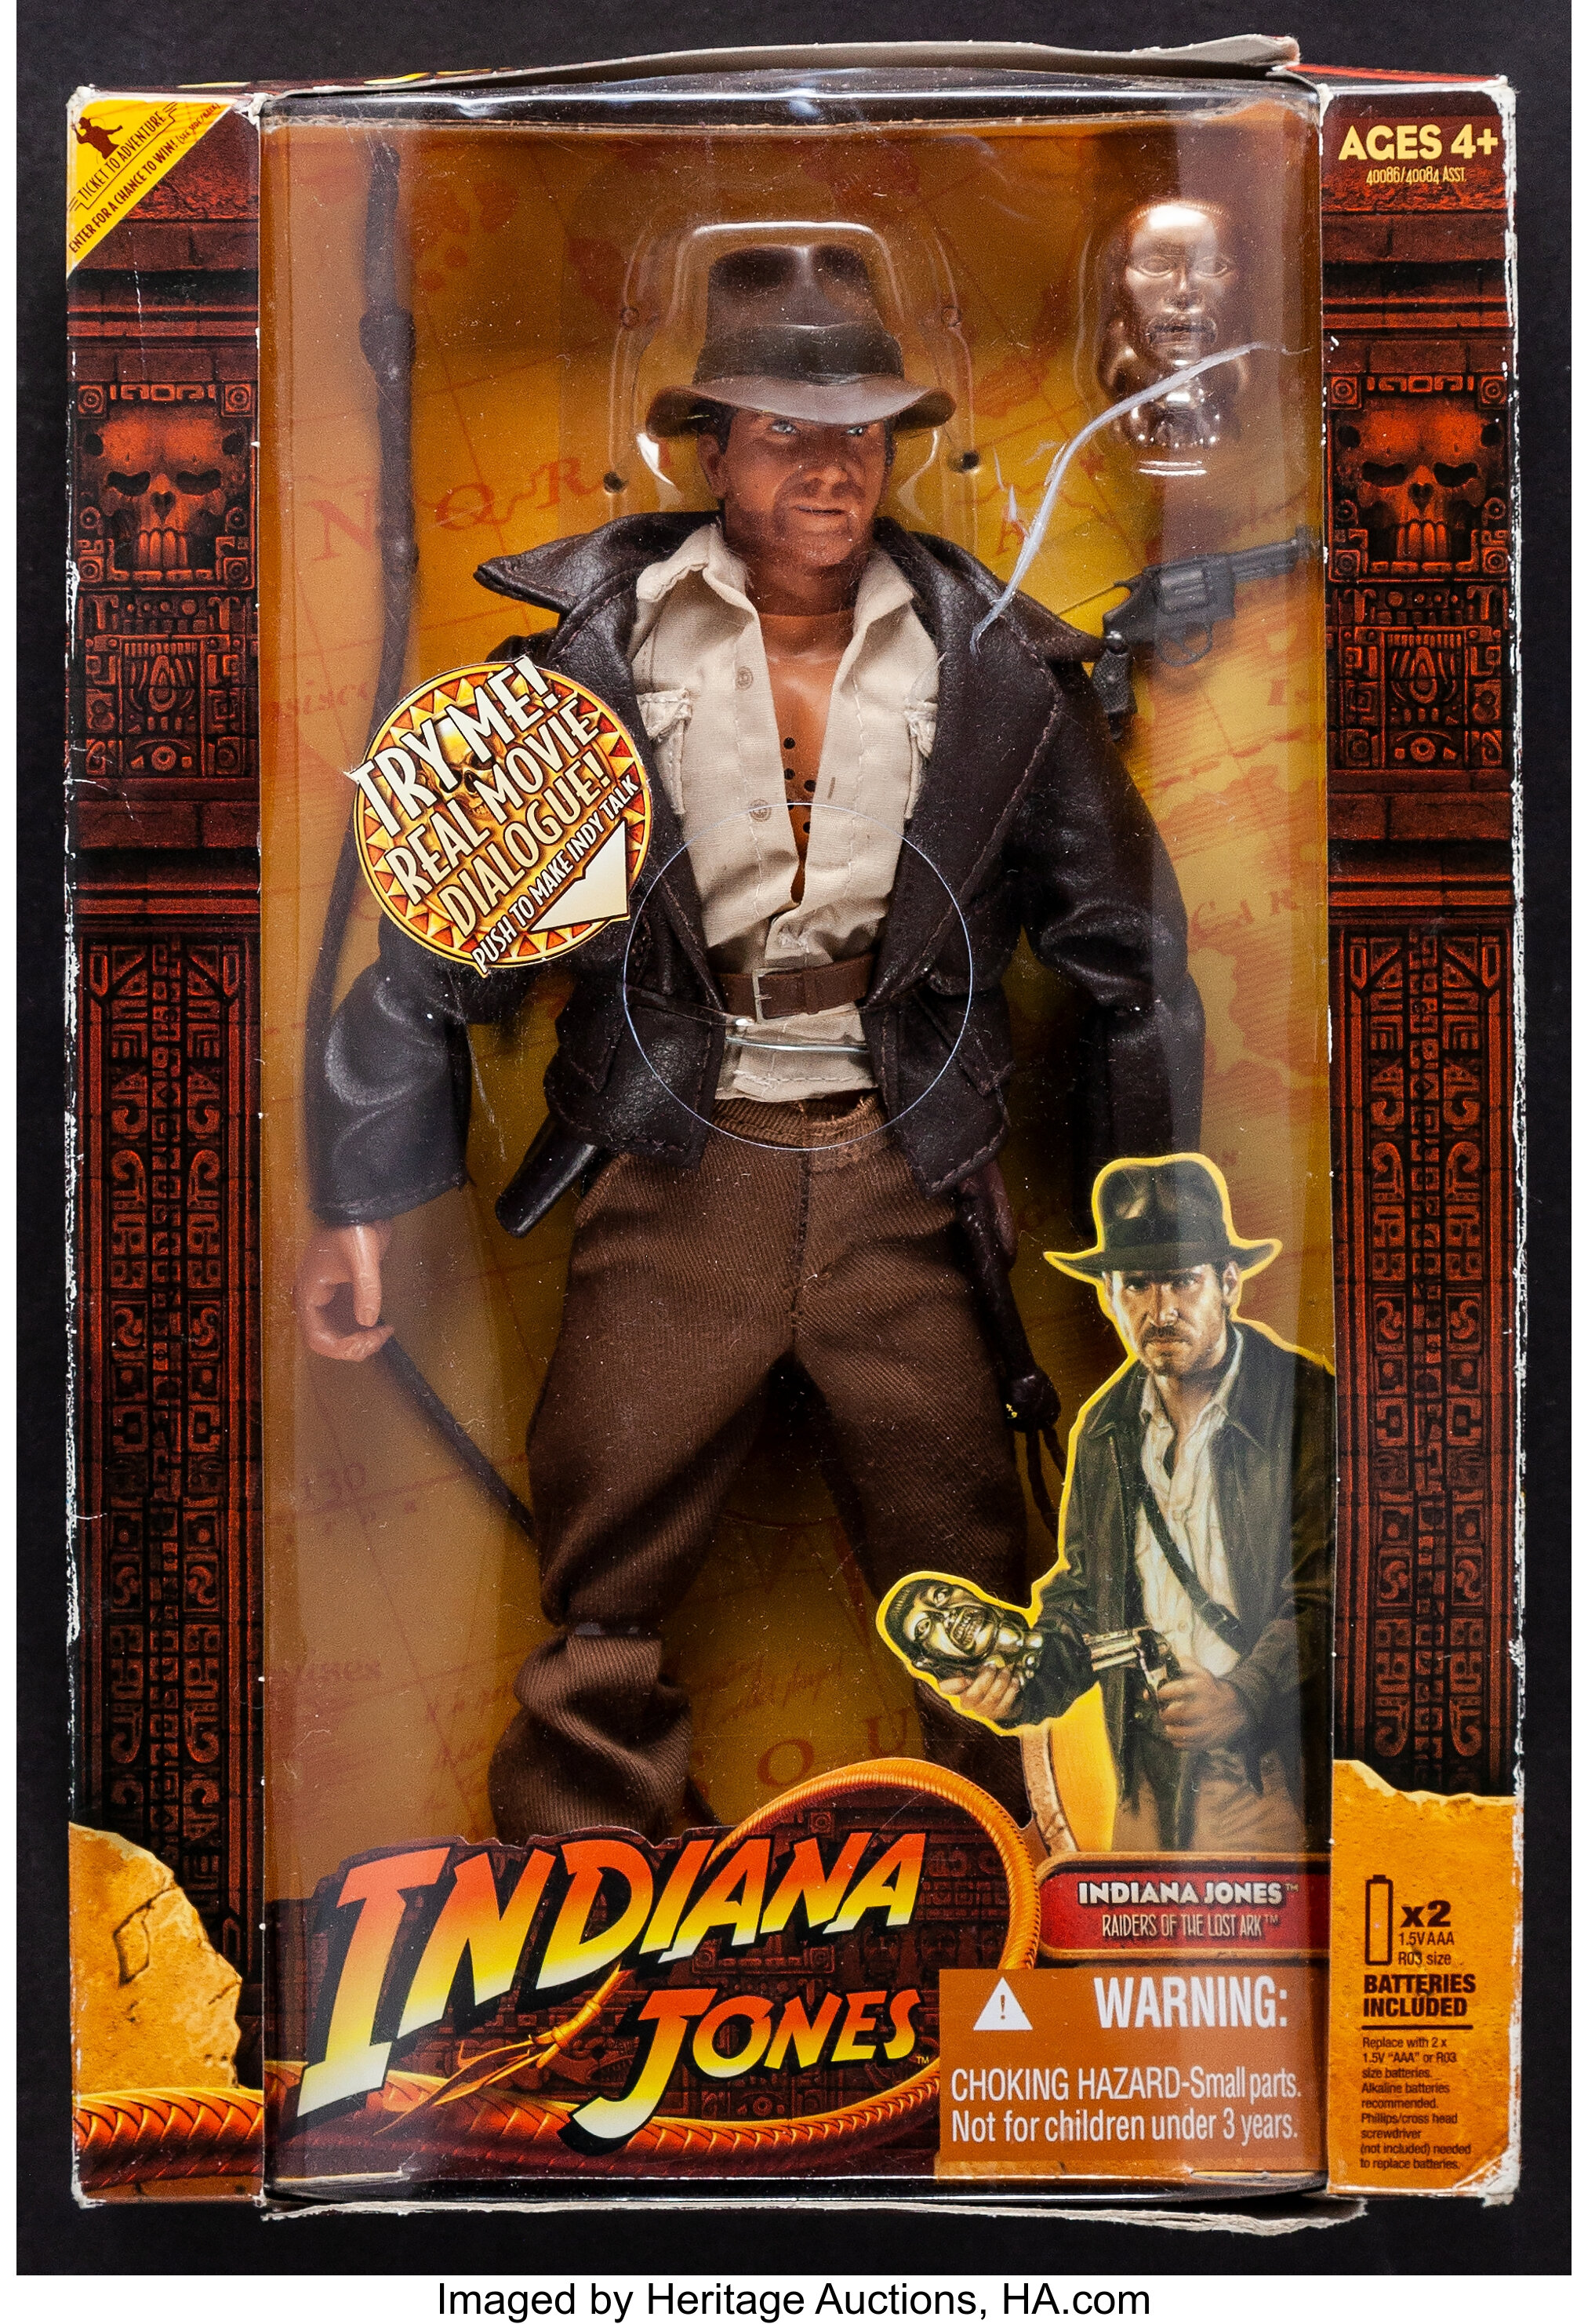 Indiana Jones Raiders of the Lost Ark Indy Action Figure Hasbro 2008 #40075  NRFP 